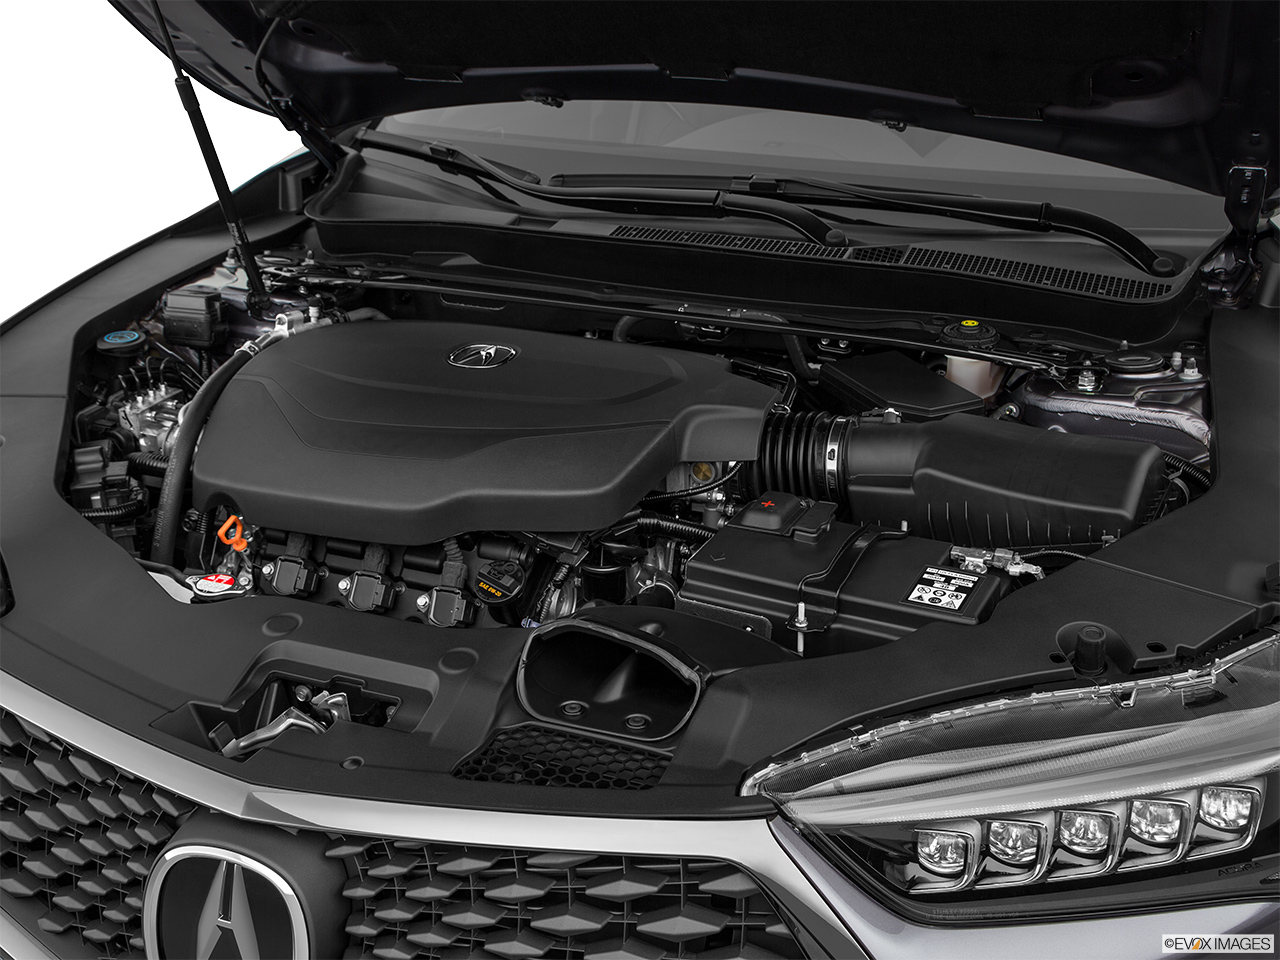 2019 Acura TLX 3.5L Engine. 